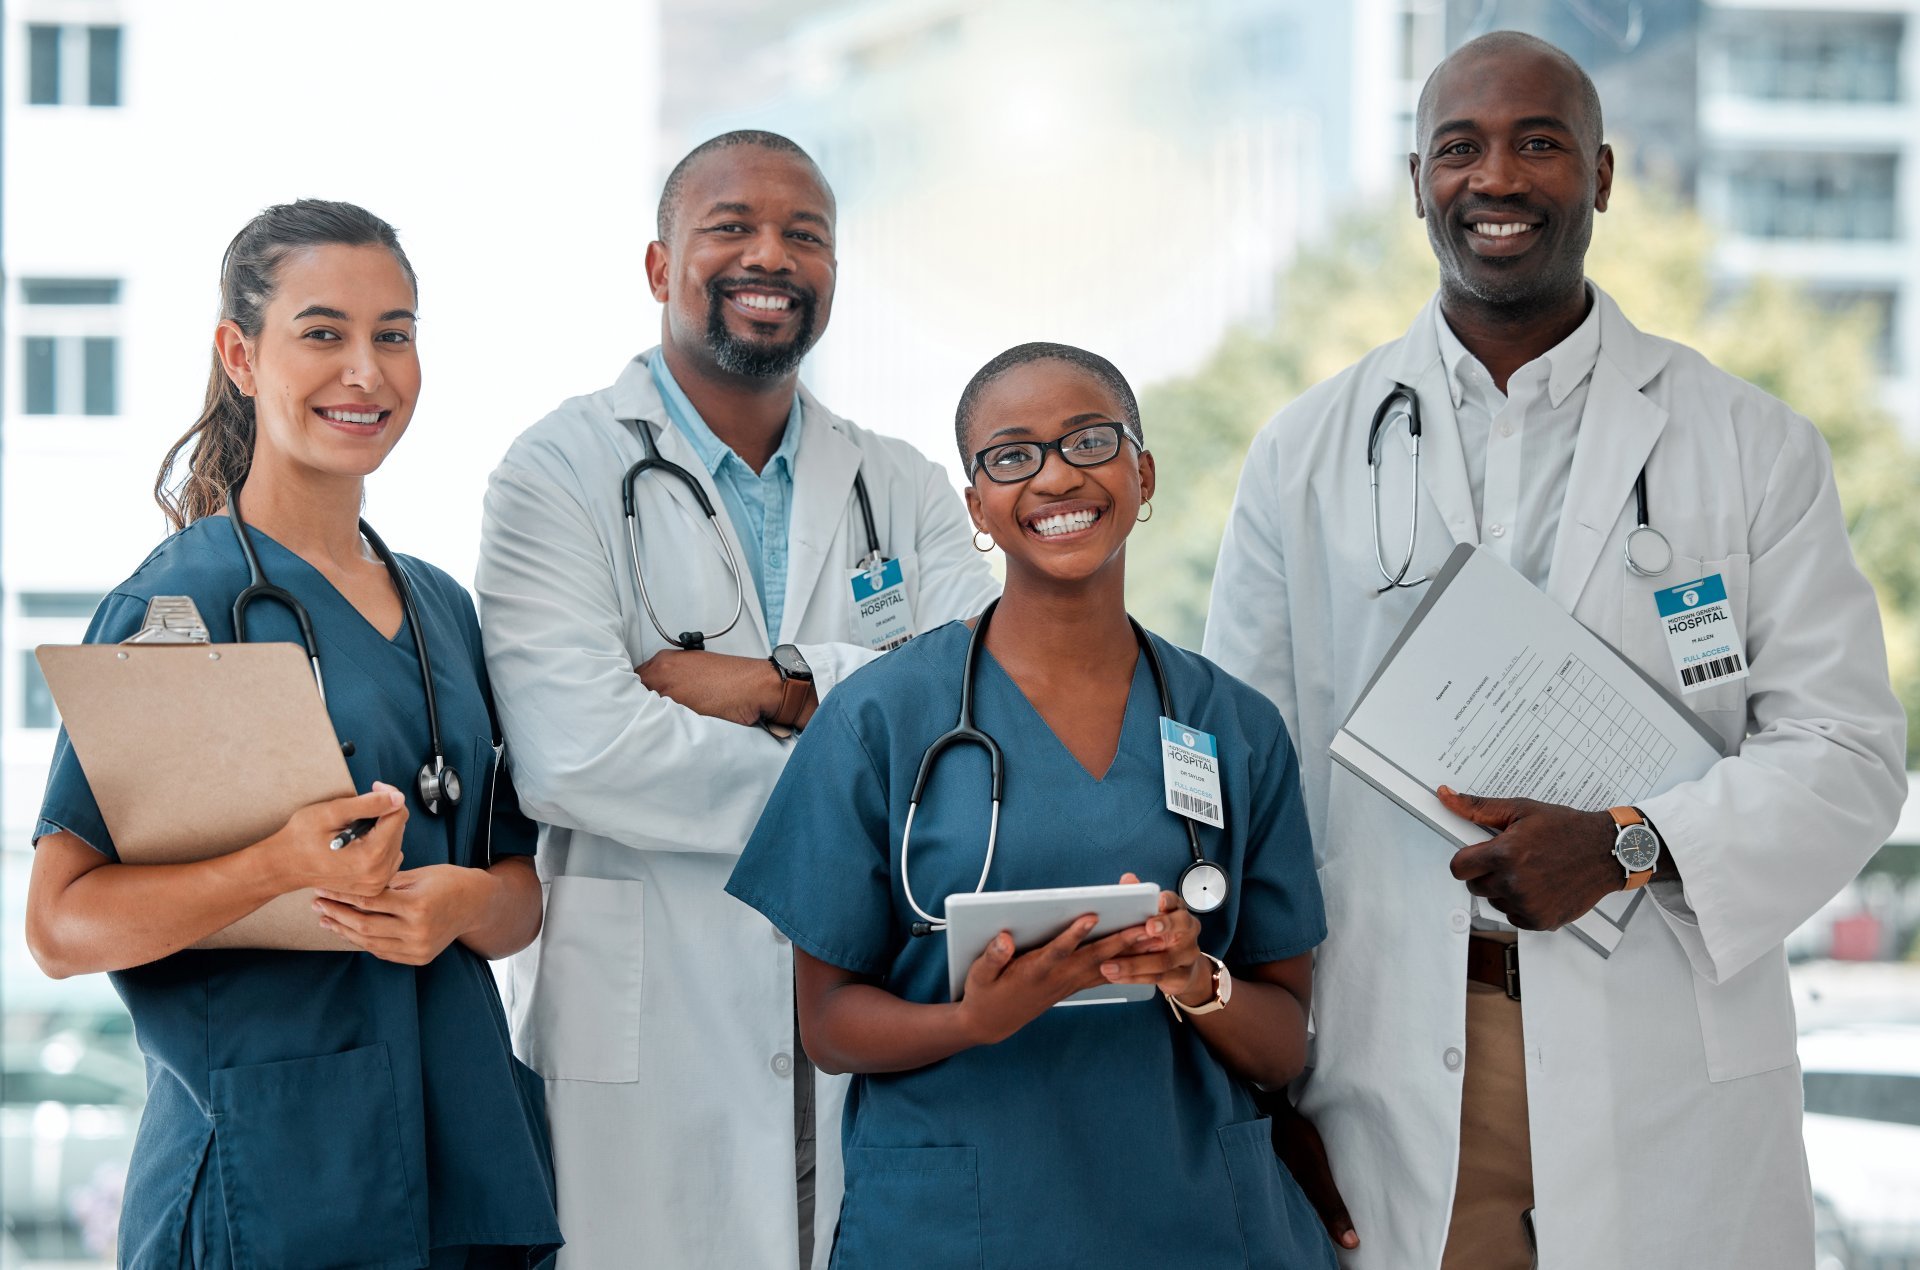 Doctors nurses healthcare professionals qualified healthcare workers